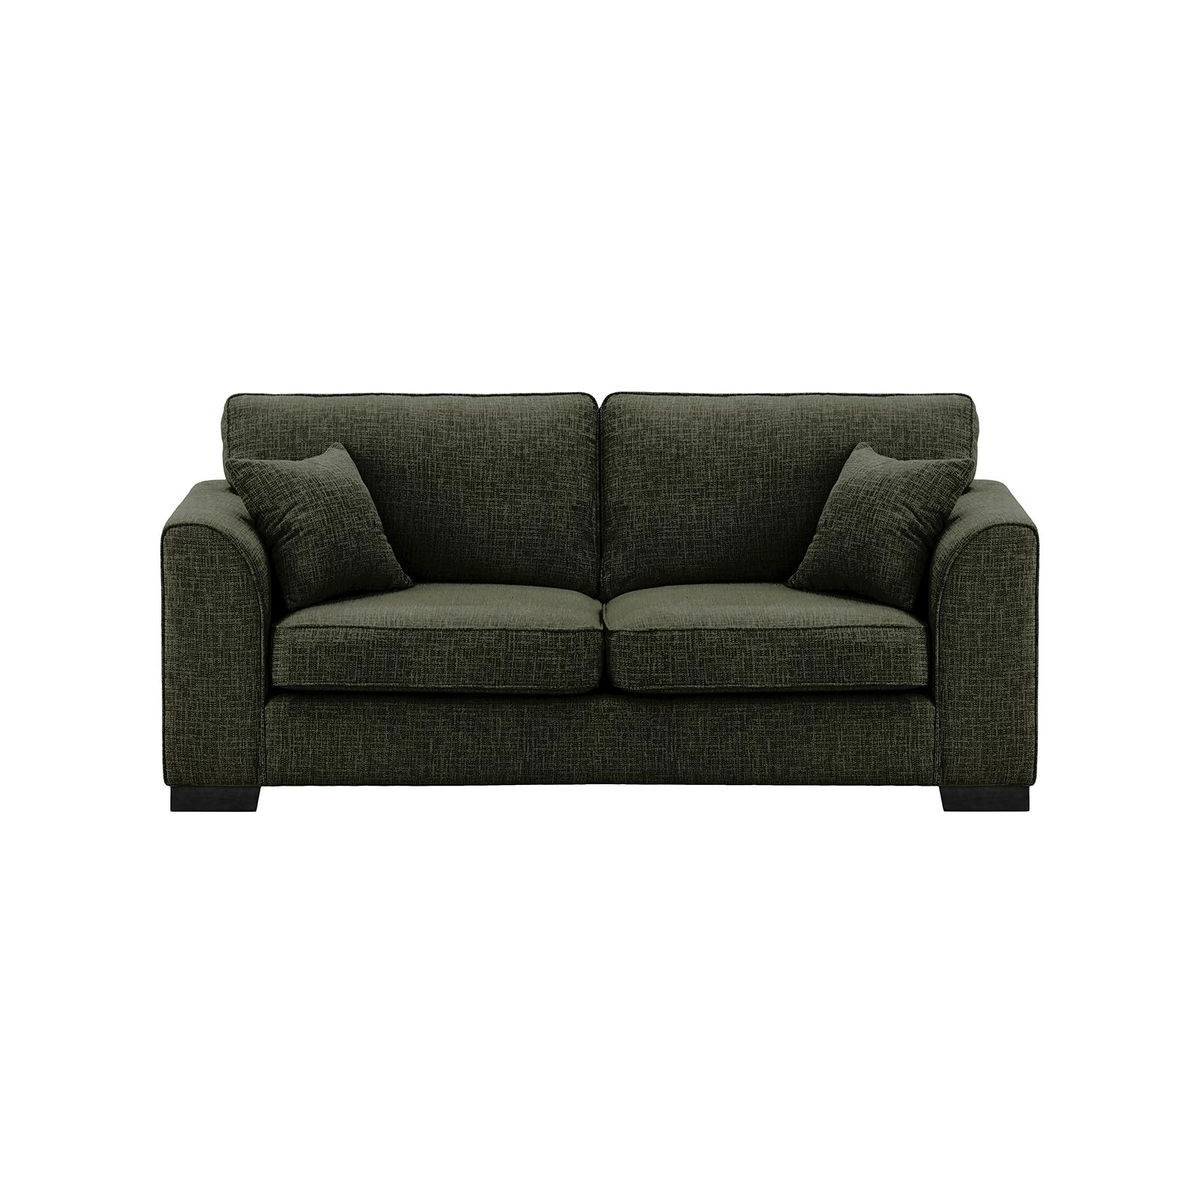 Avos 3 Seater Sofa, black, Leg colour: black - image 1